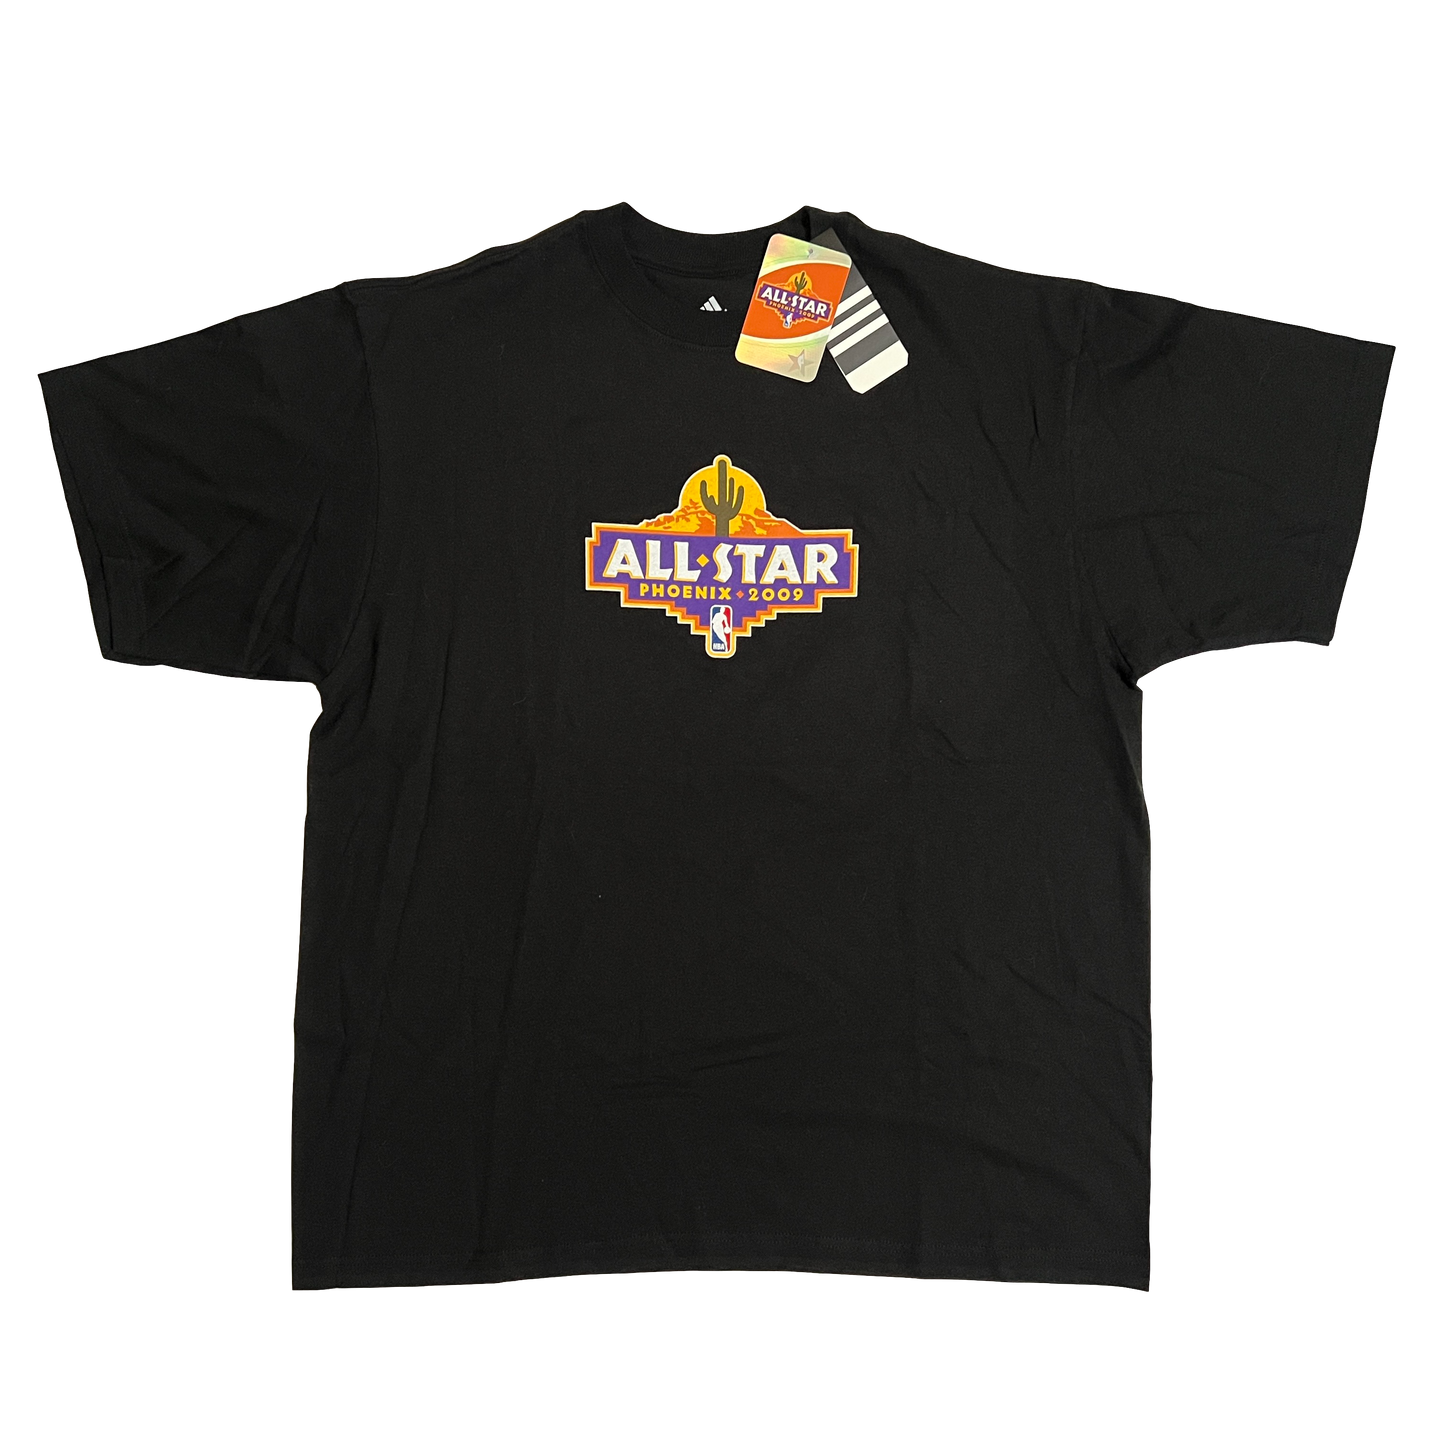 2009 Phoenix NBA All Star Game Shirt - XL